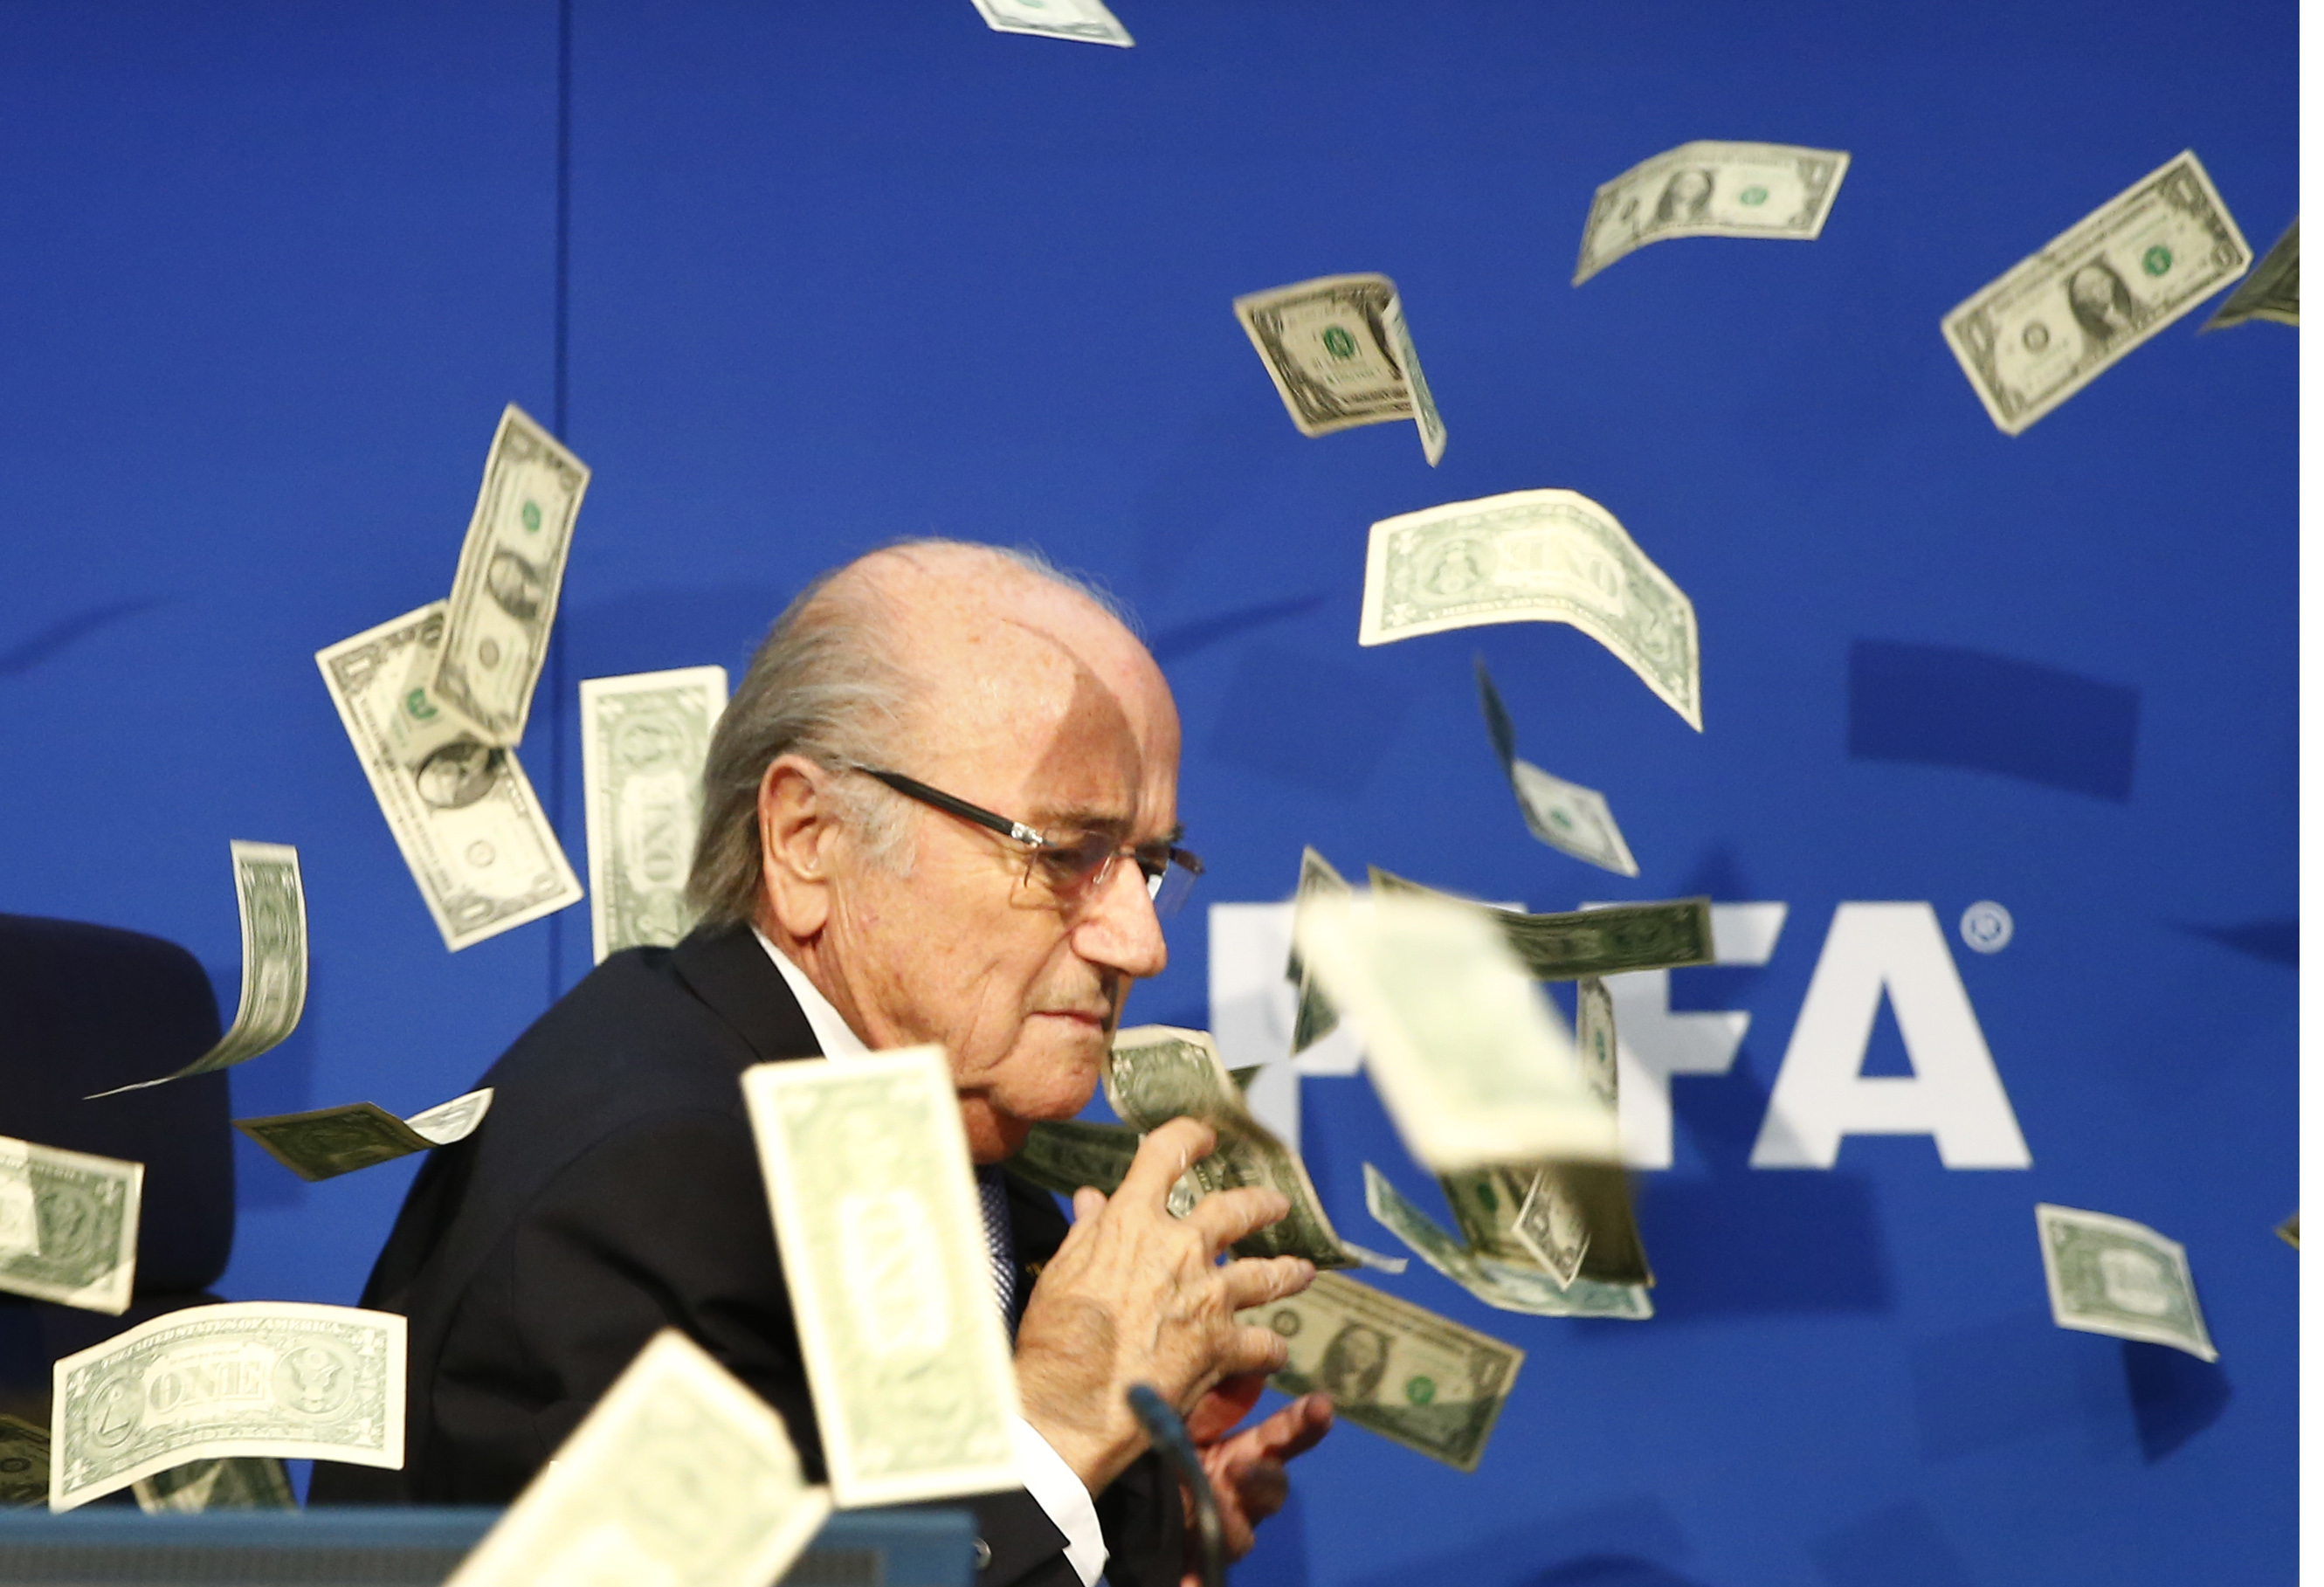 FİFA-ın sabiq prezidenti Jozef Blatterə cəza verildi - 6 il 8 ay